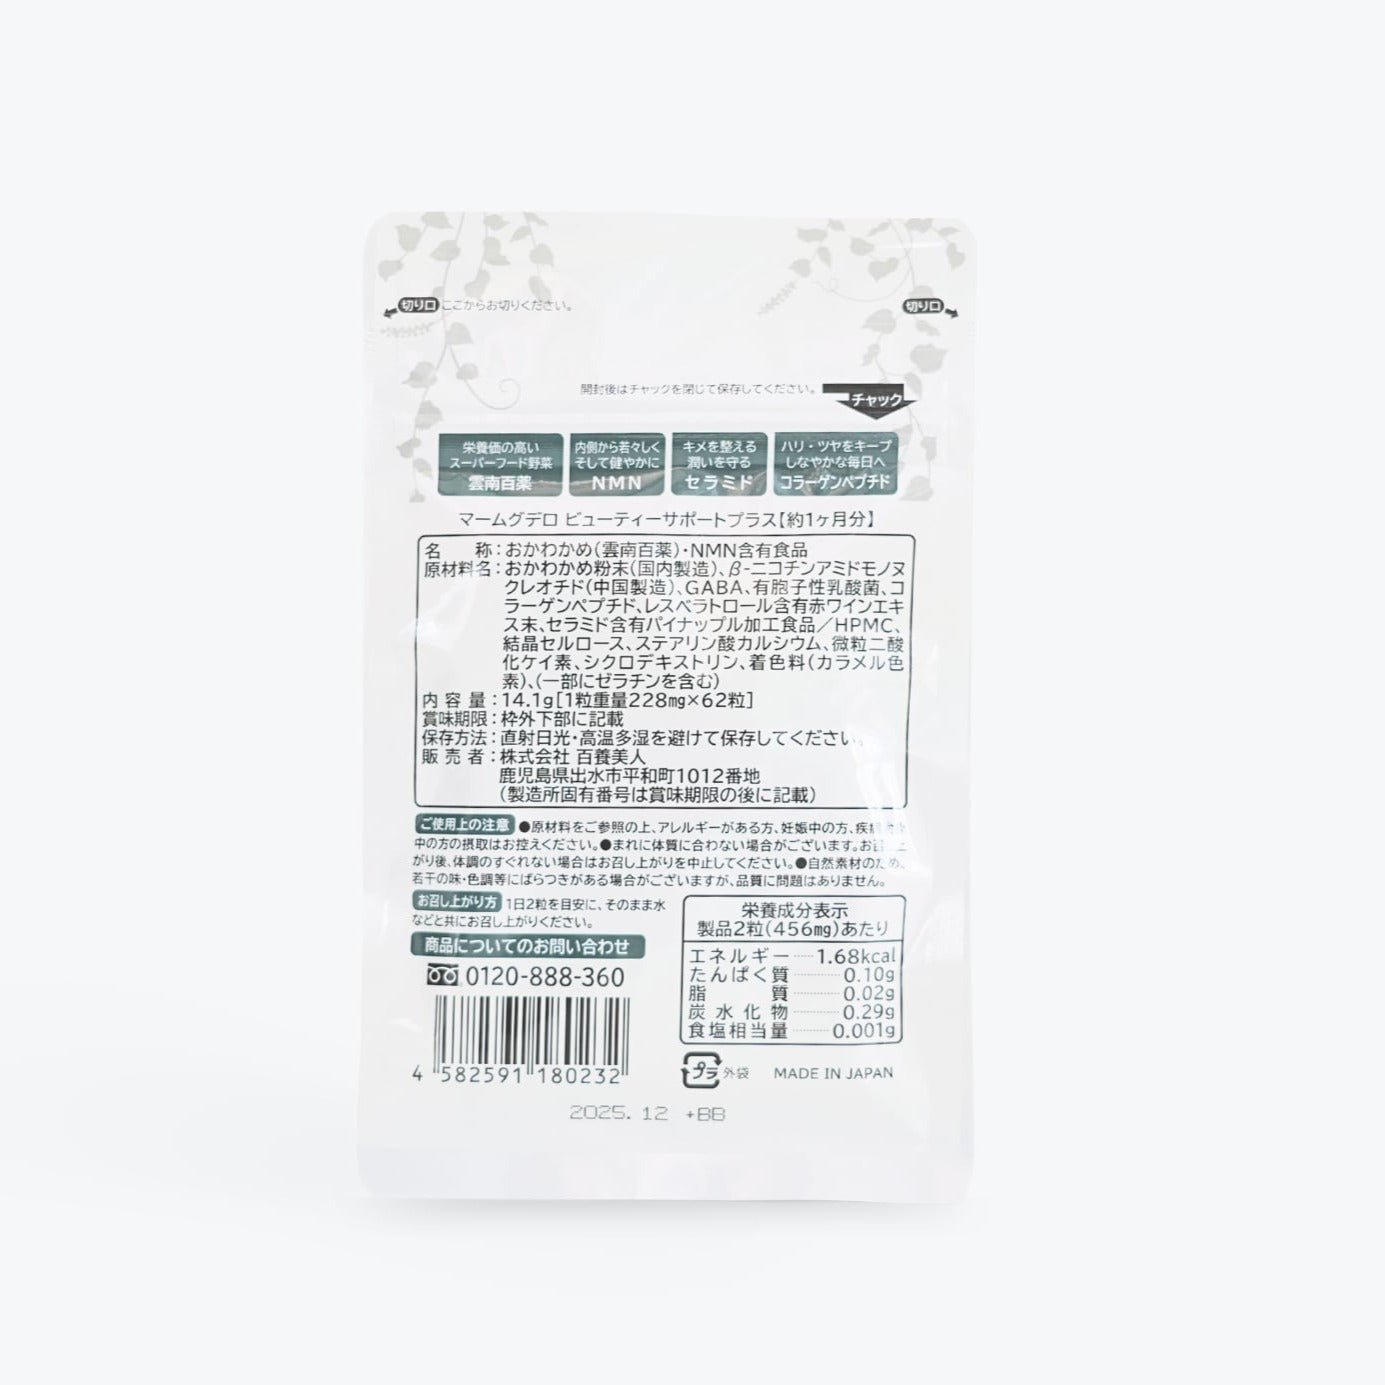 【Resveratrol, ceramide and collagen】MOMGDERO Beauty Support+ Supplement HB - Tokyo Fresh Direct